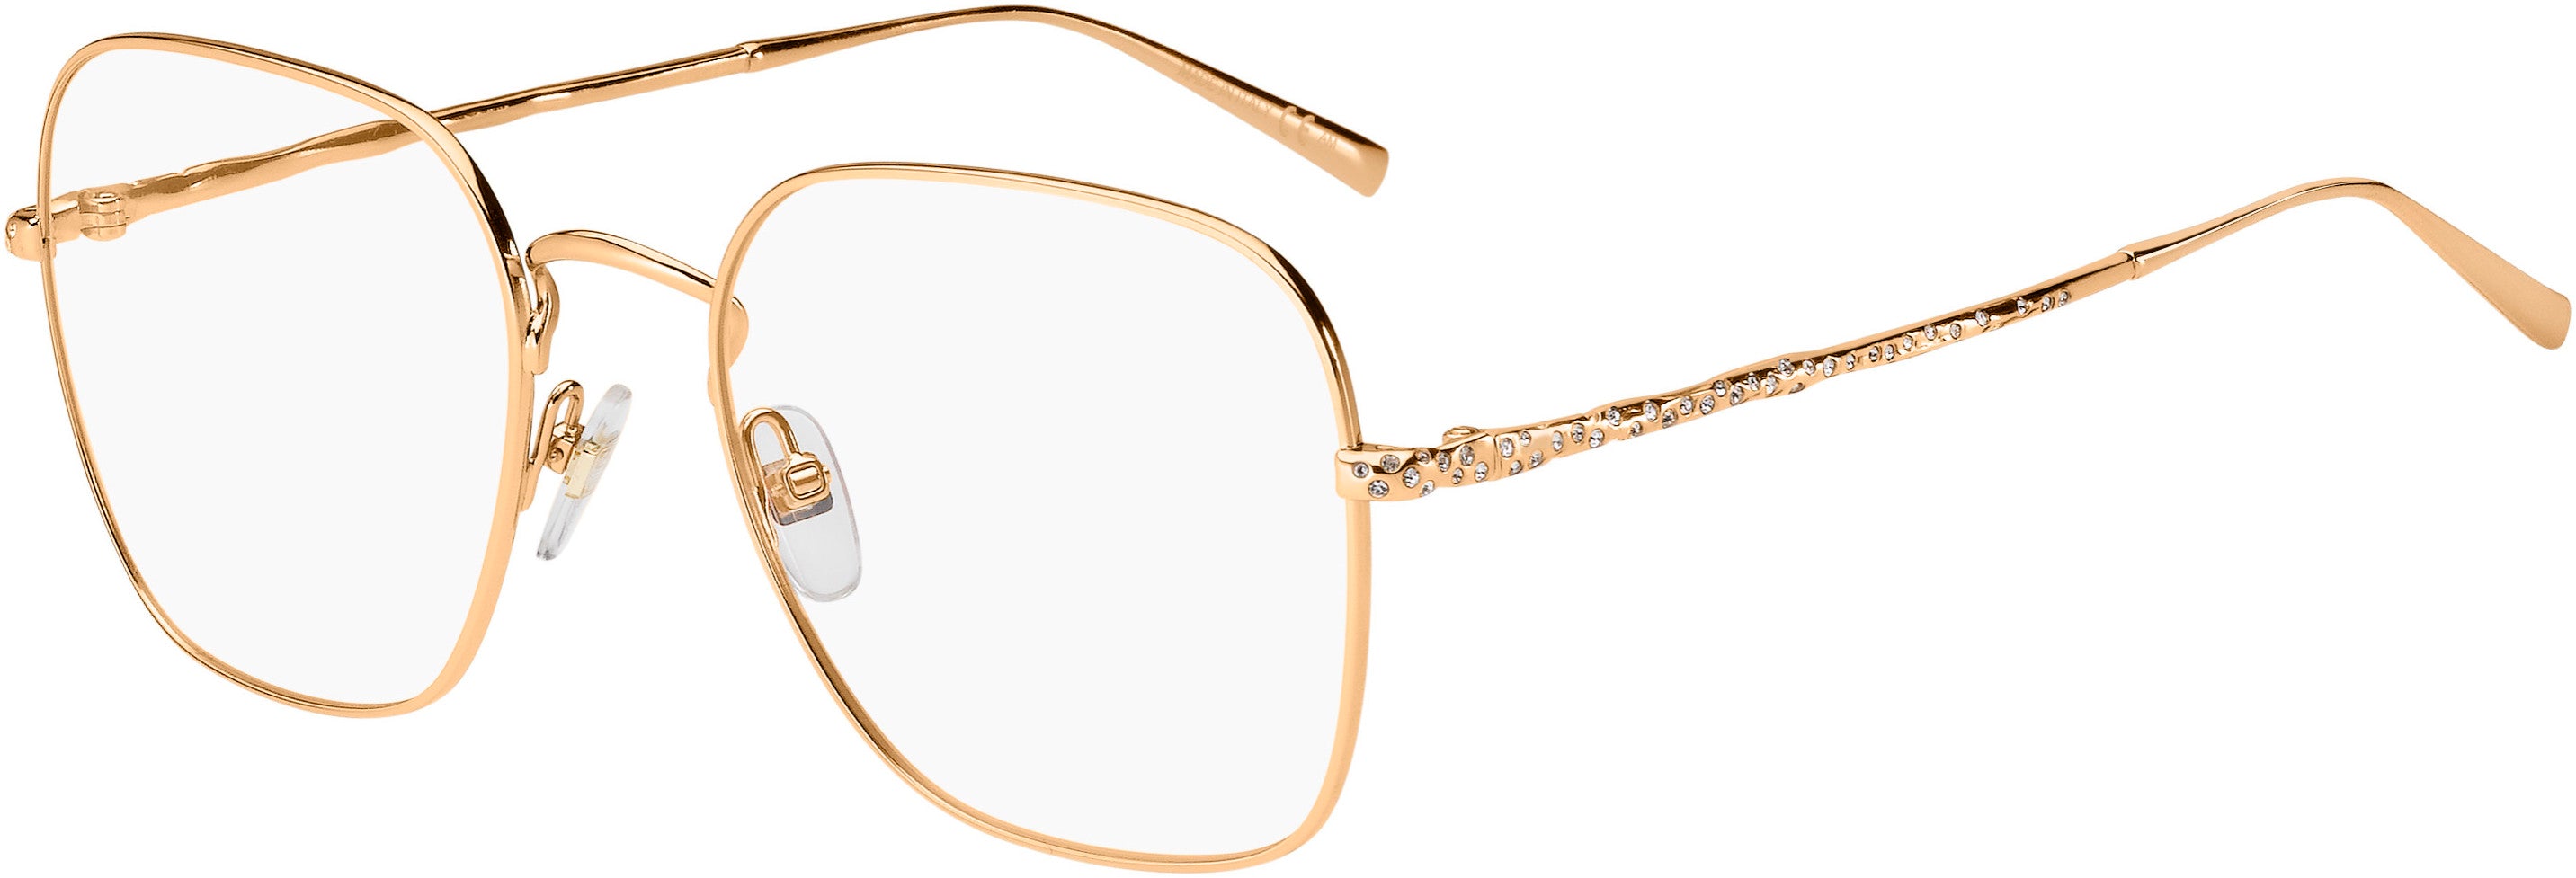  Givenchy 0128 Square Eyeglasses 0DDB-0DDB  Gold Copper (00 Demo Lens)